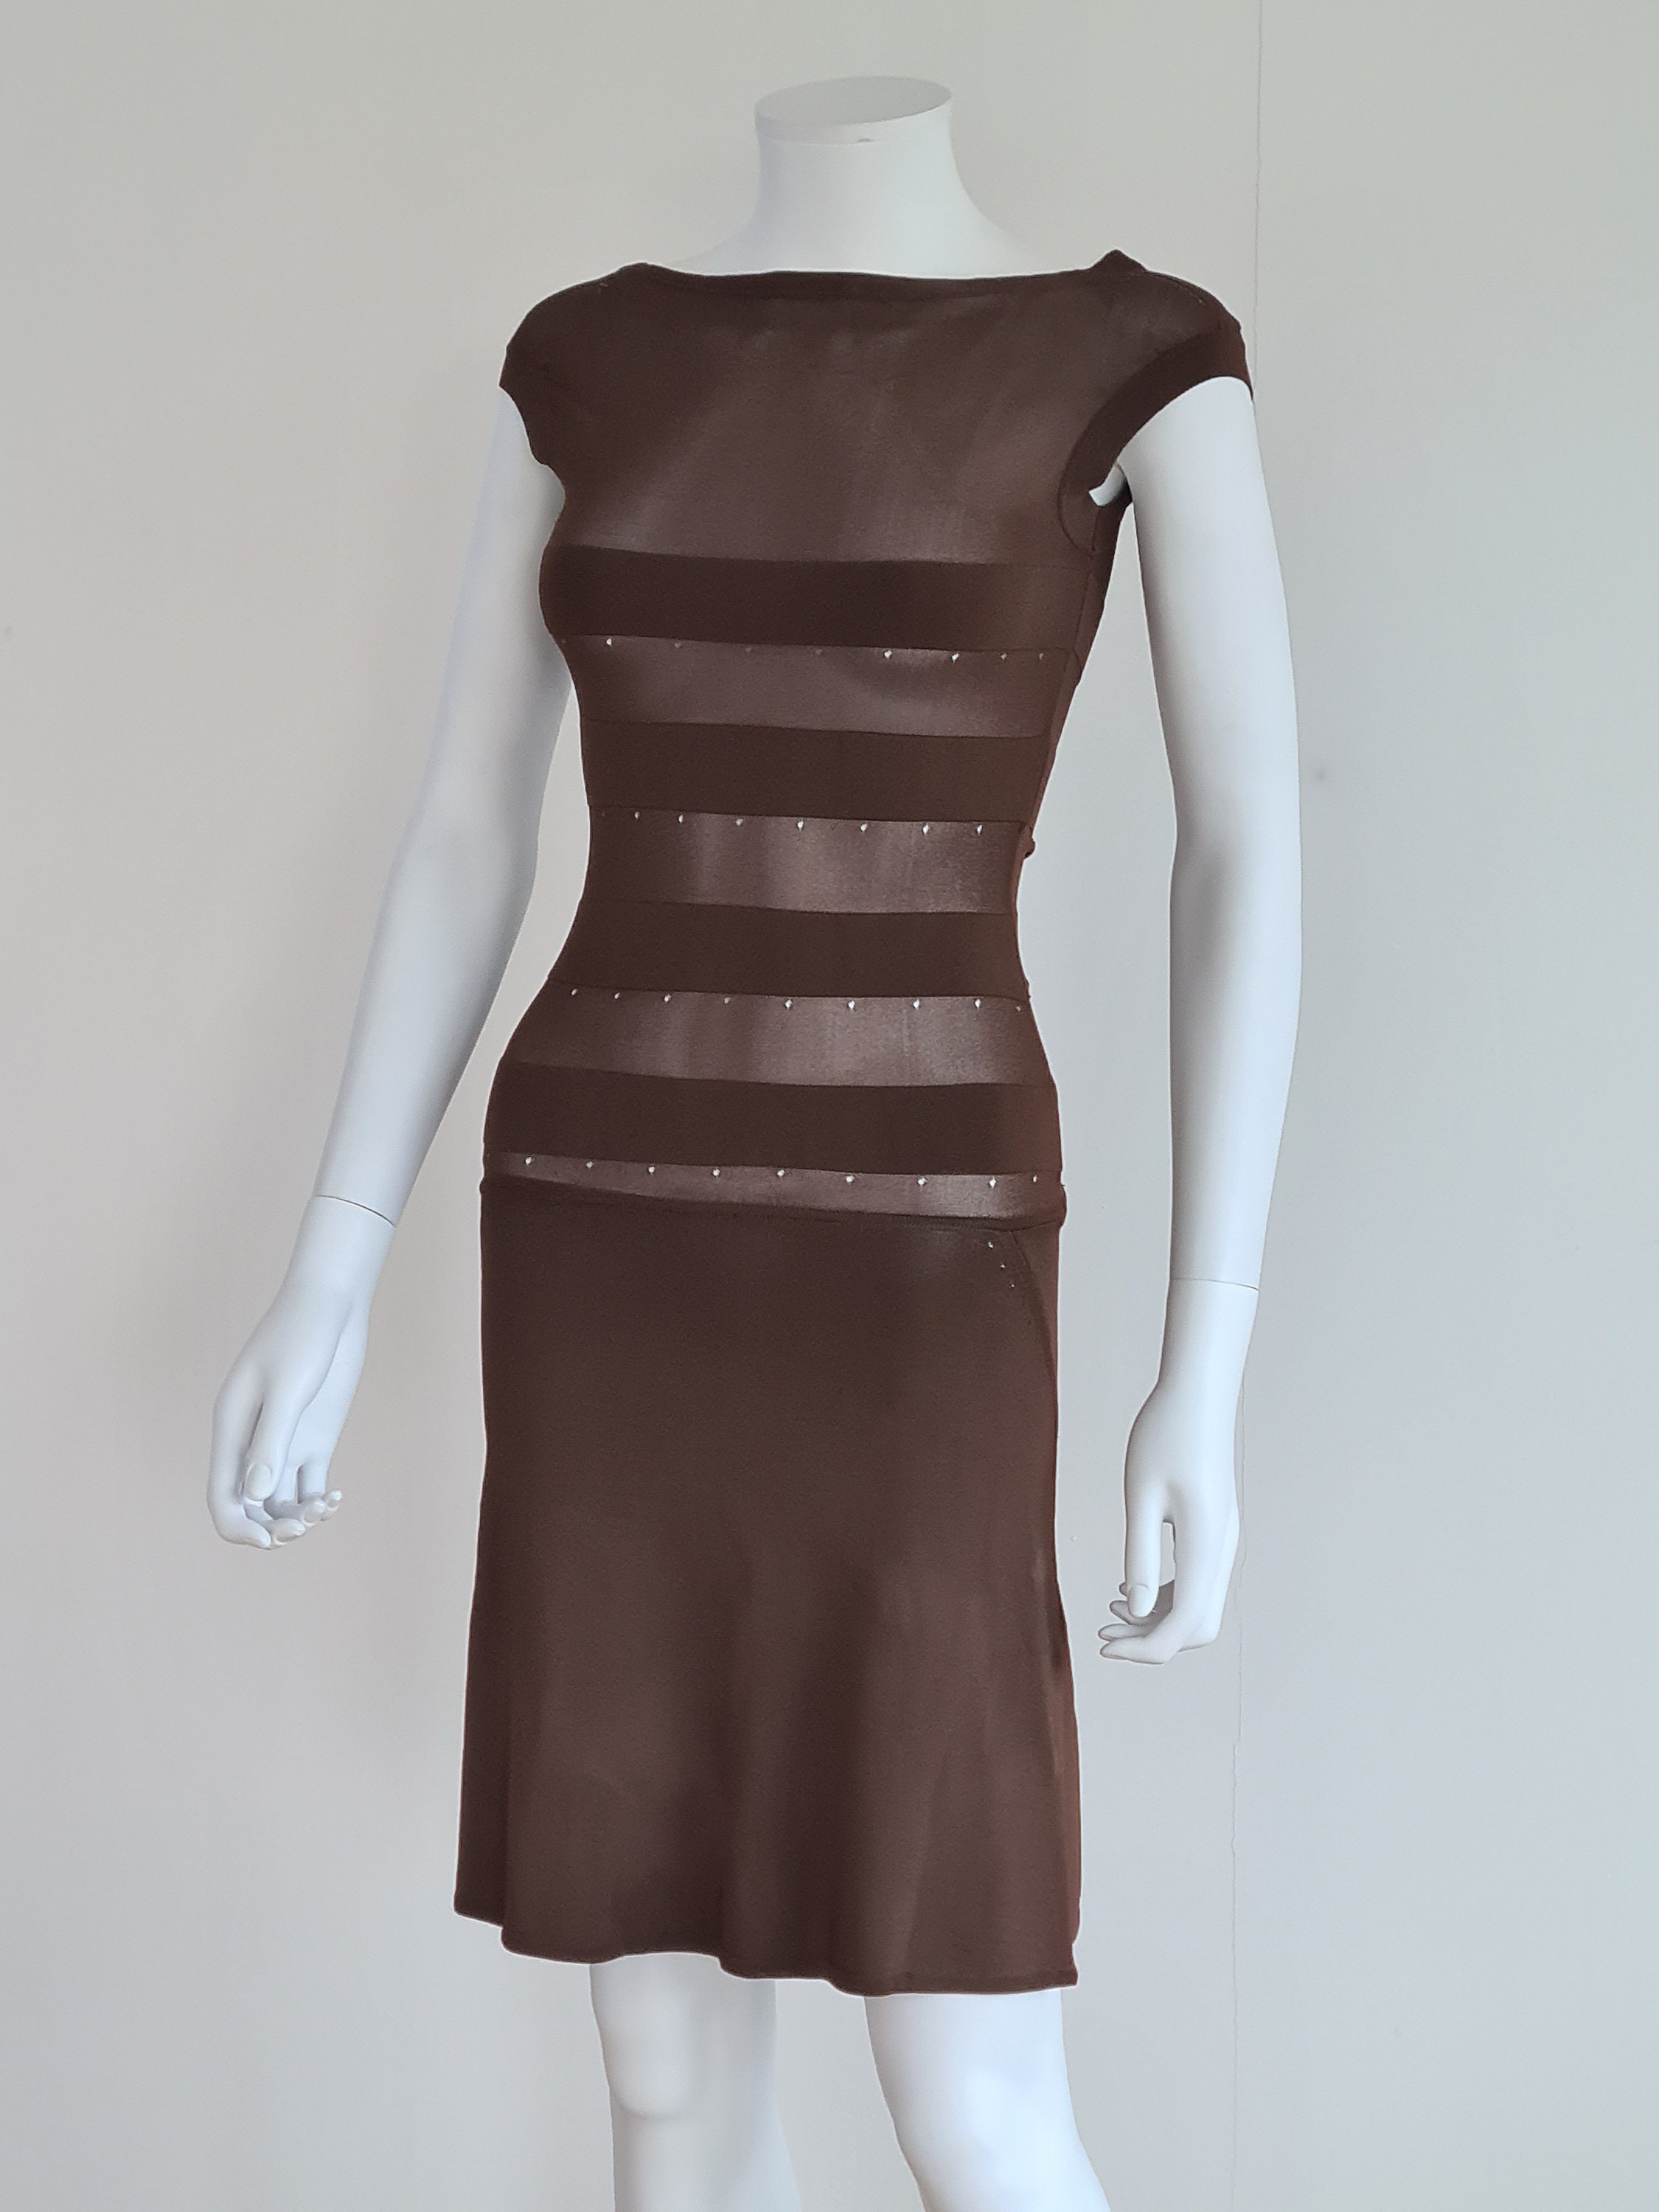 Helmut Lang SS01 Print Ad 'Silk Bound Dress